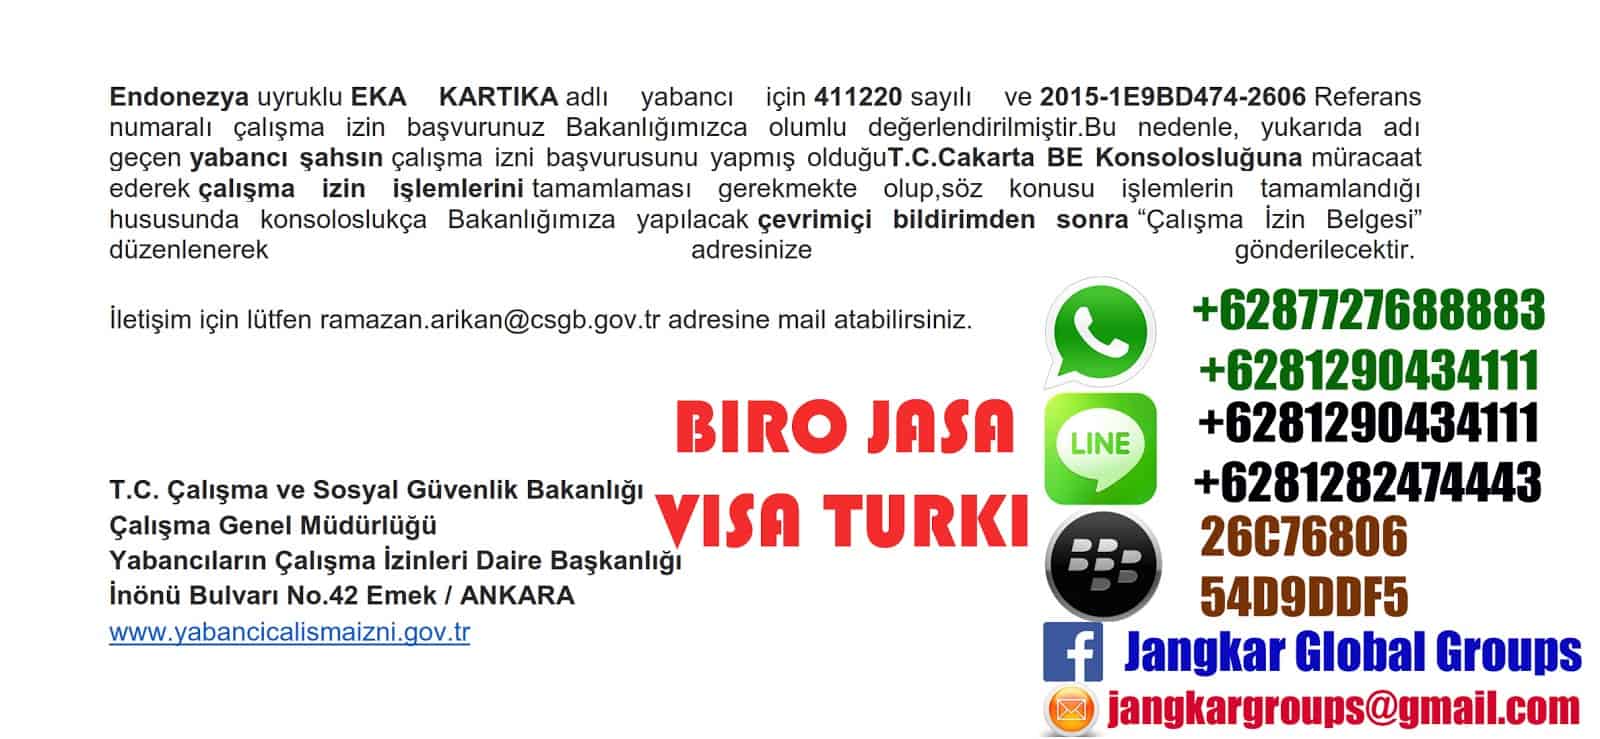 biro jasa turki agen kerja keluar negeri